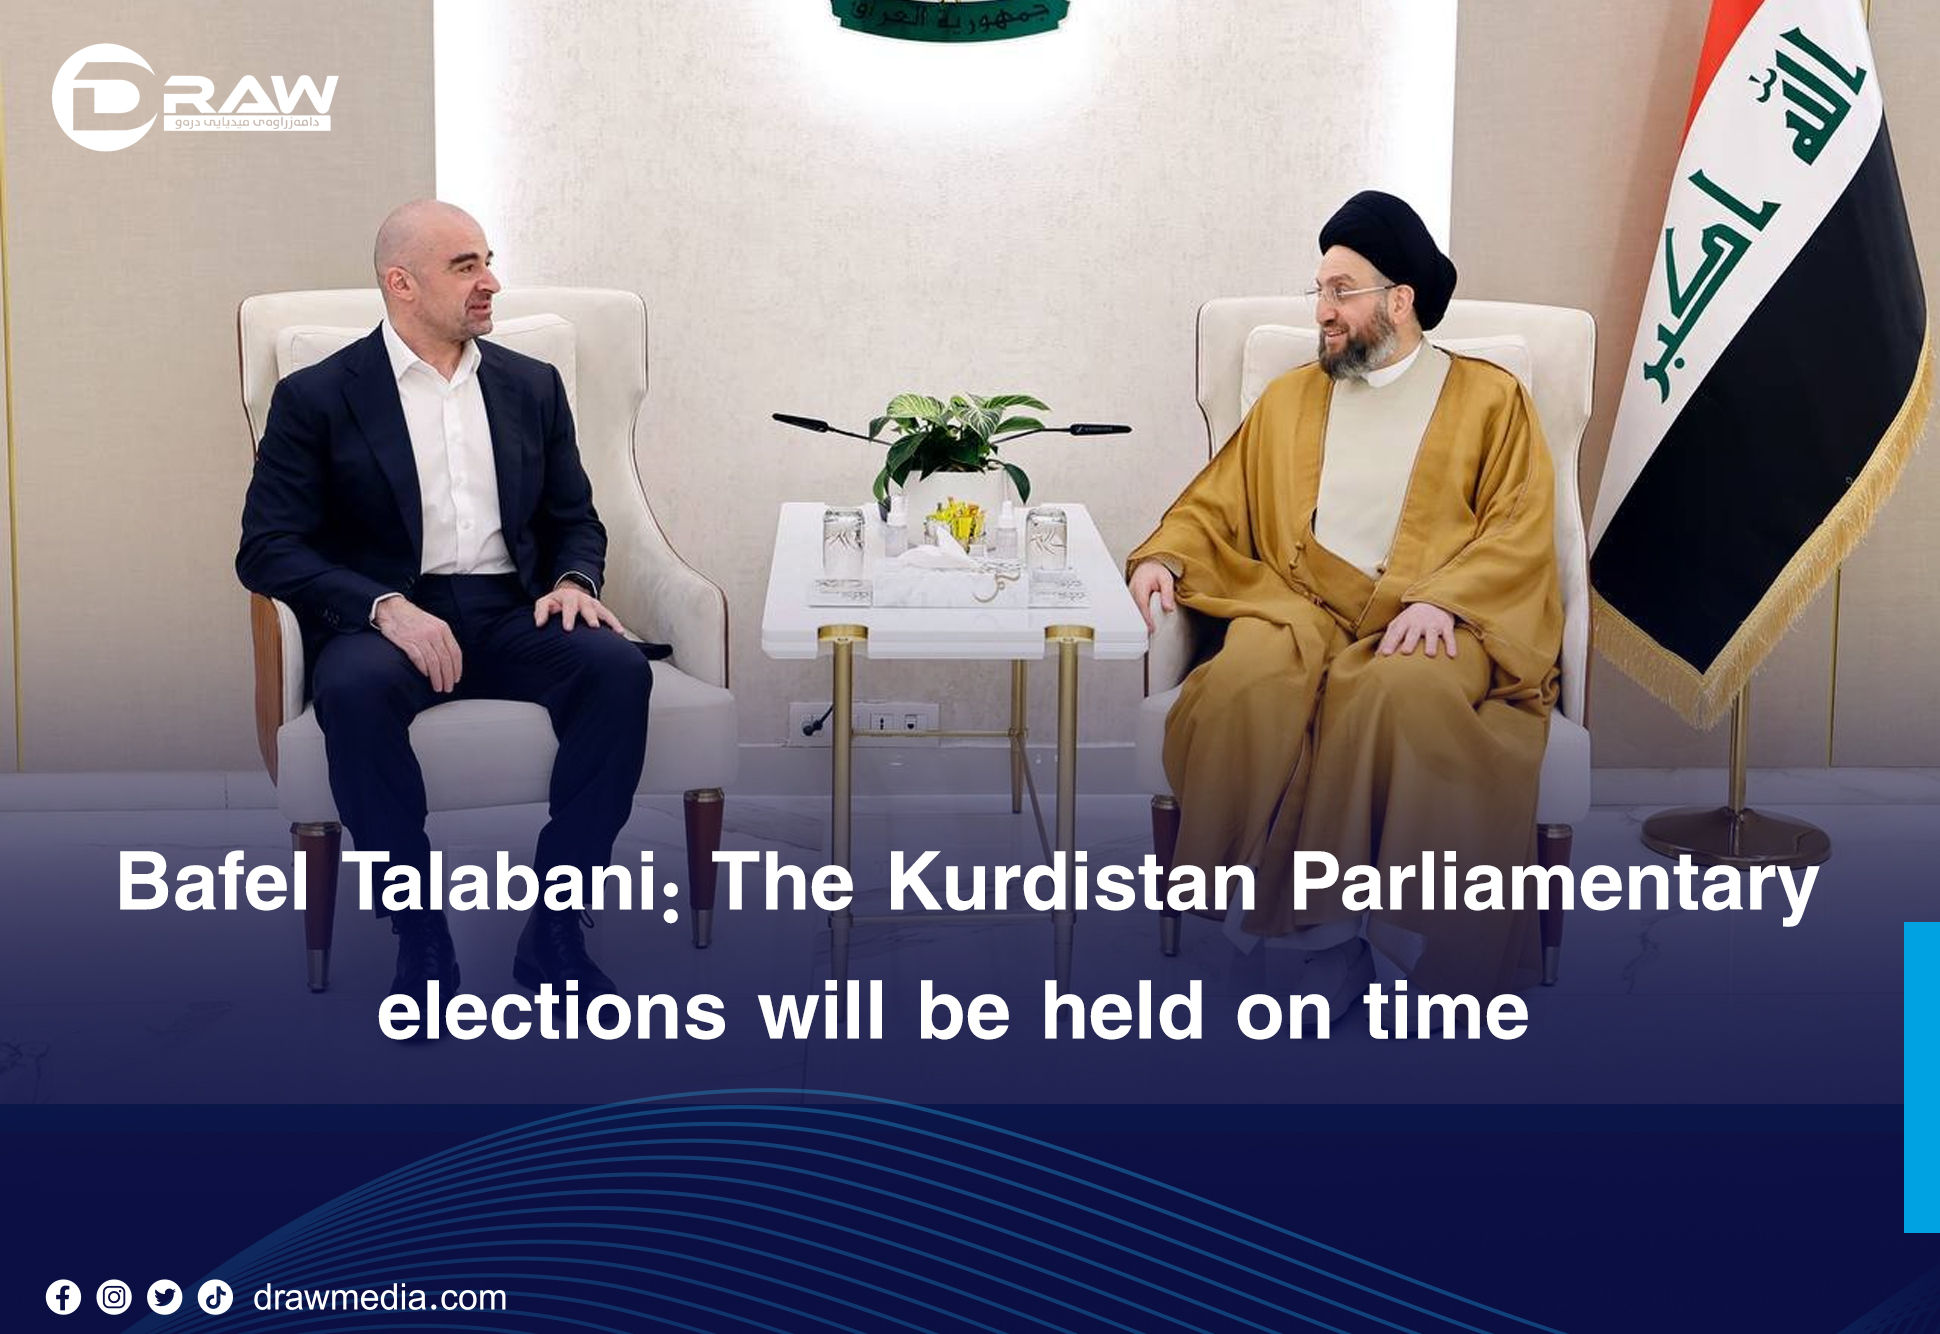 Draw Media- Bafel Talabani: The Kurdistan Parliamentary elections will be held on time